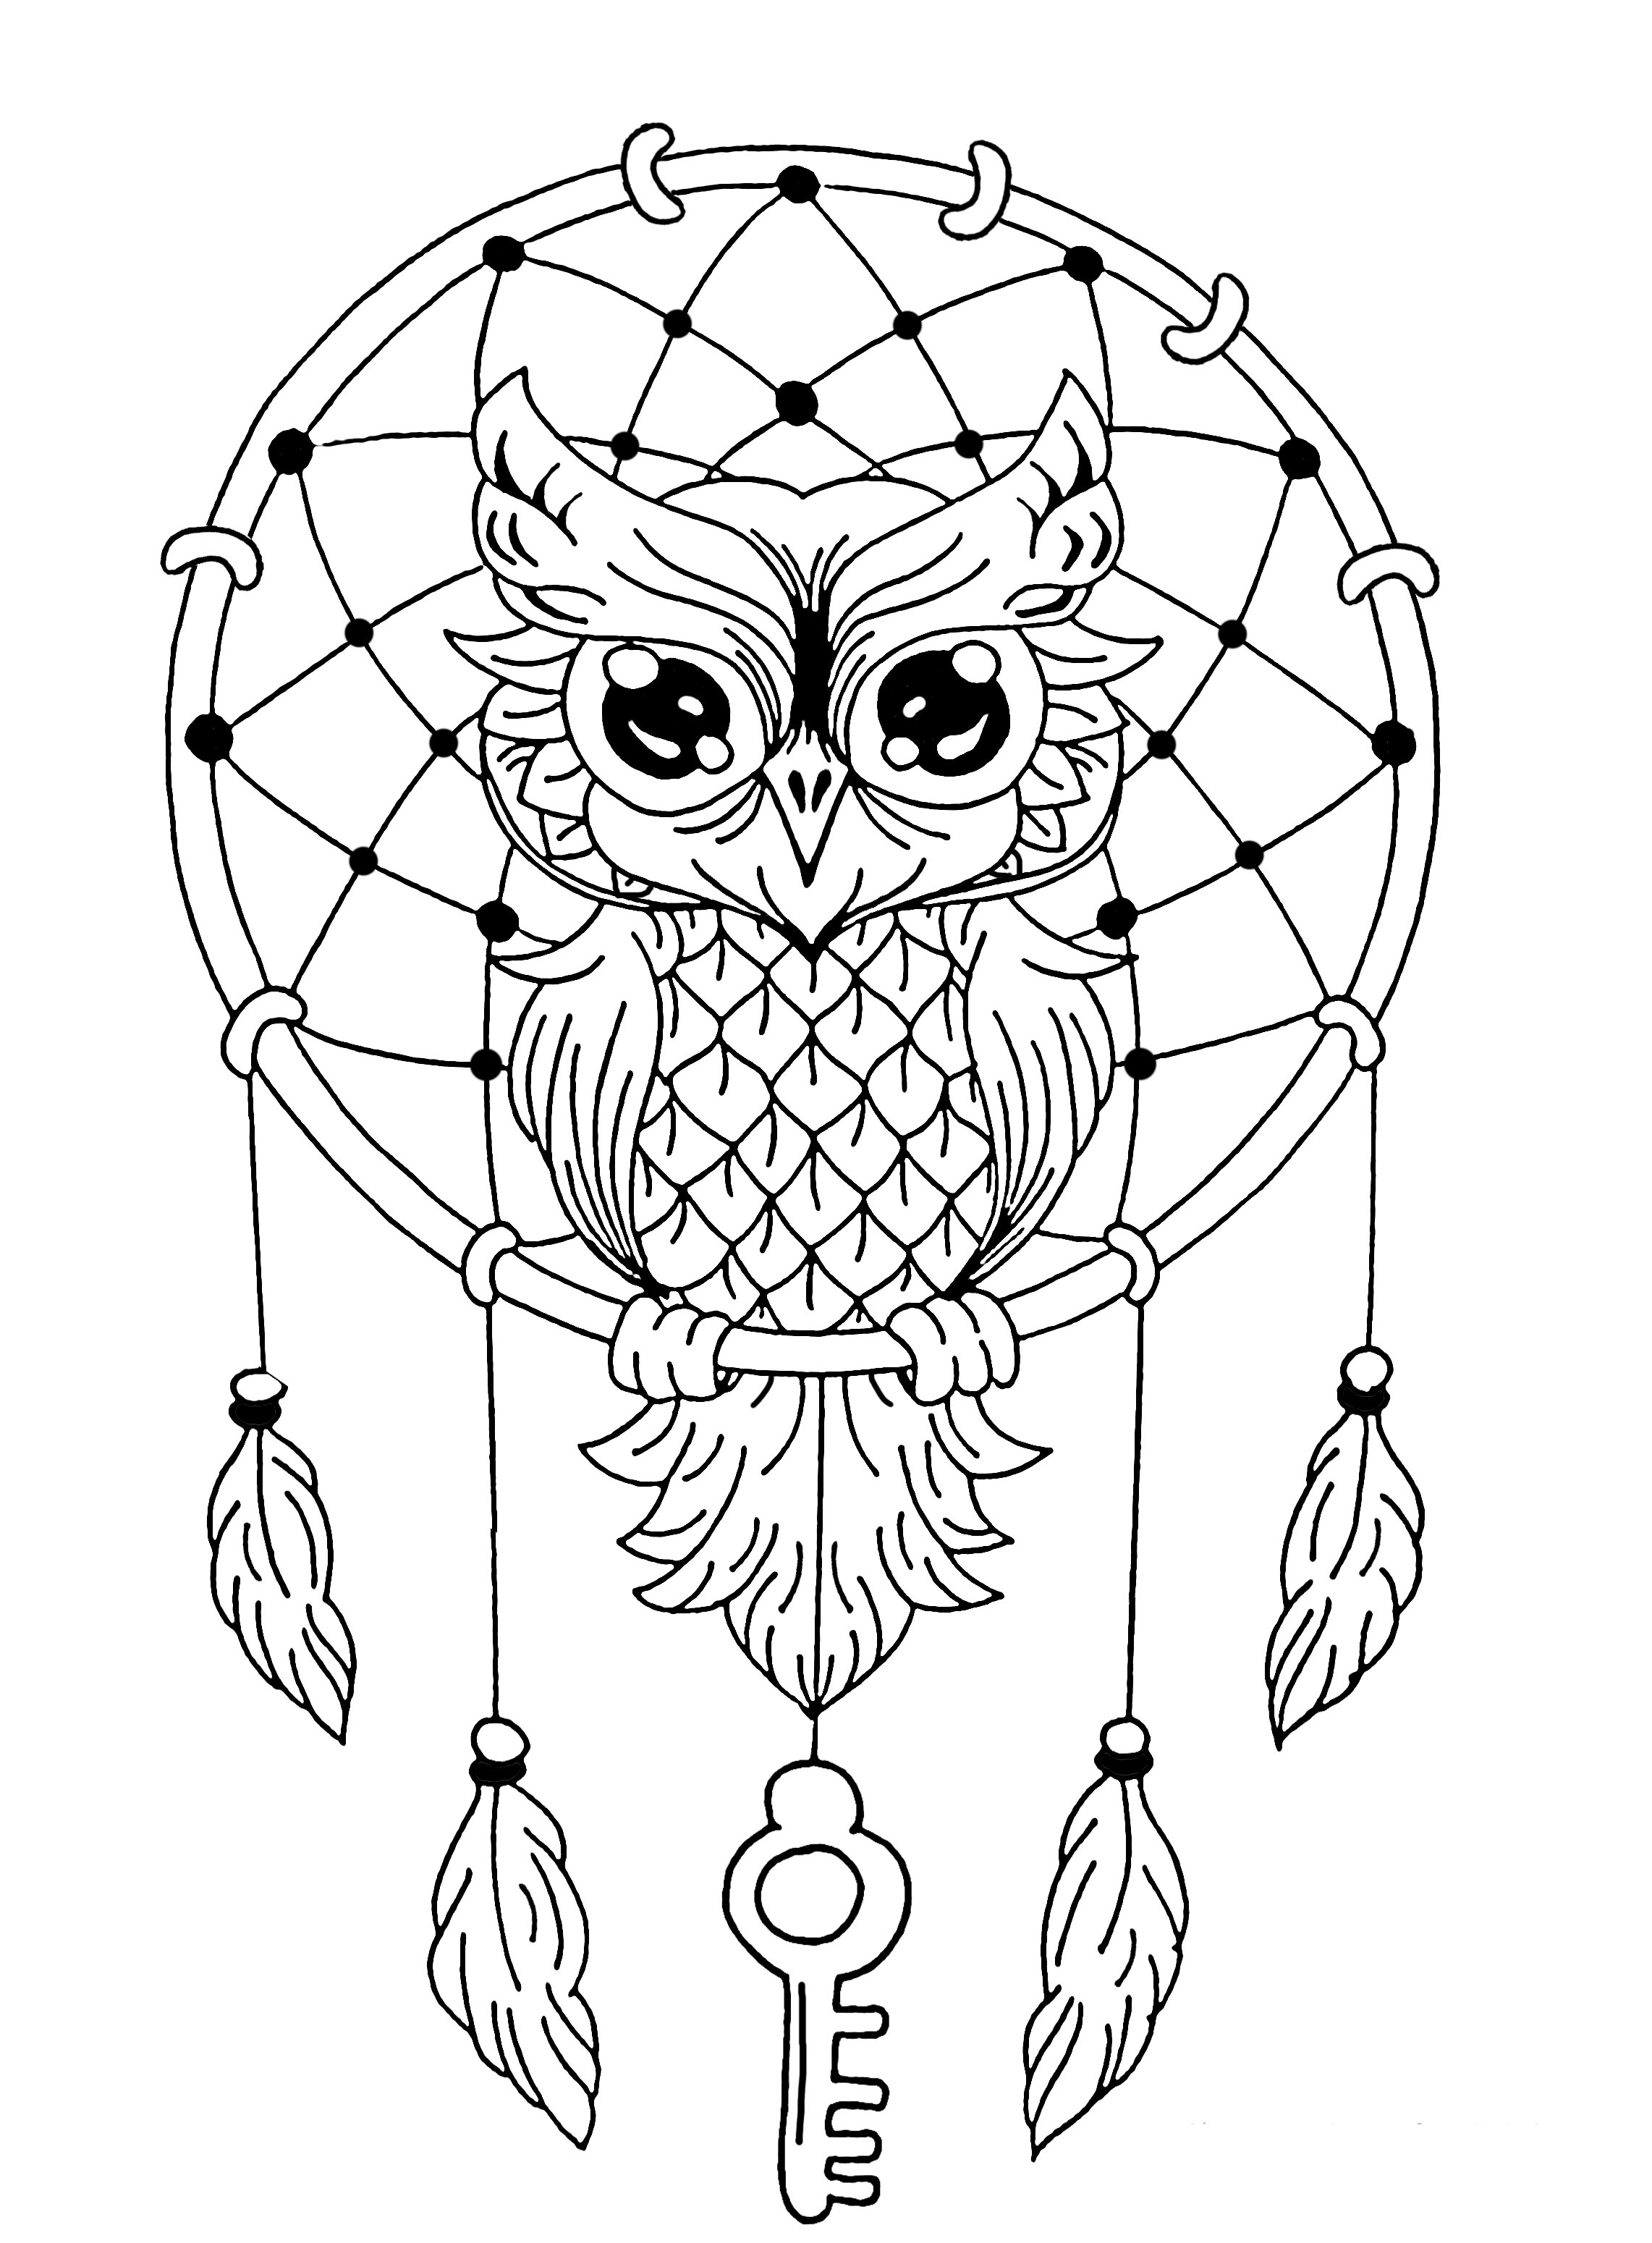 Unique Owl Dreamcatcher Mandala Mandalas with animals 100 Mandalas